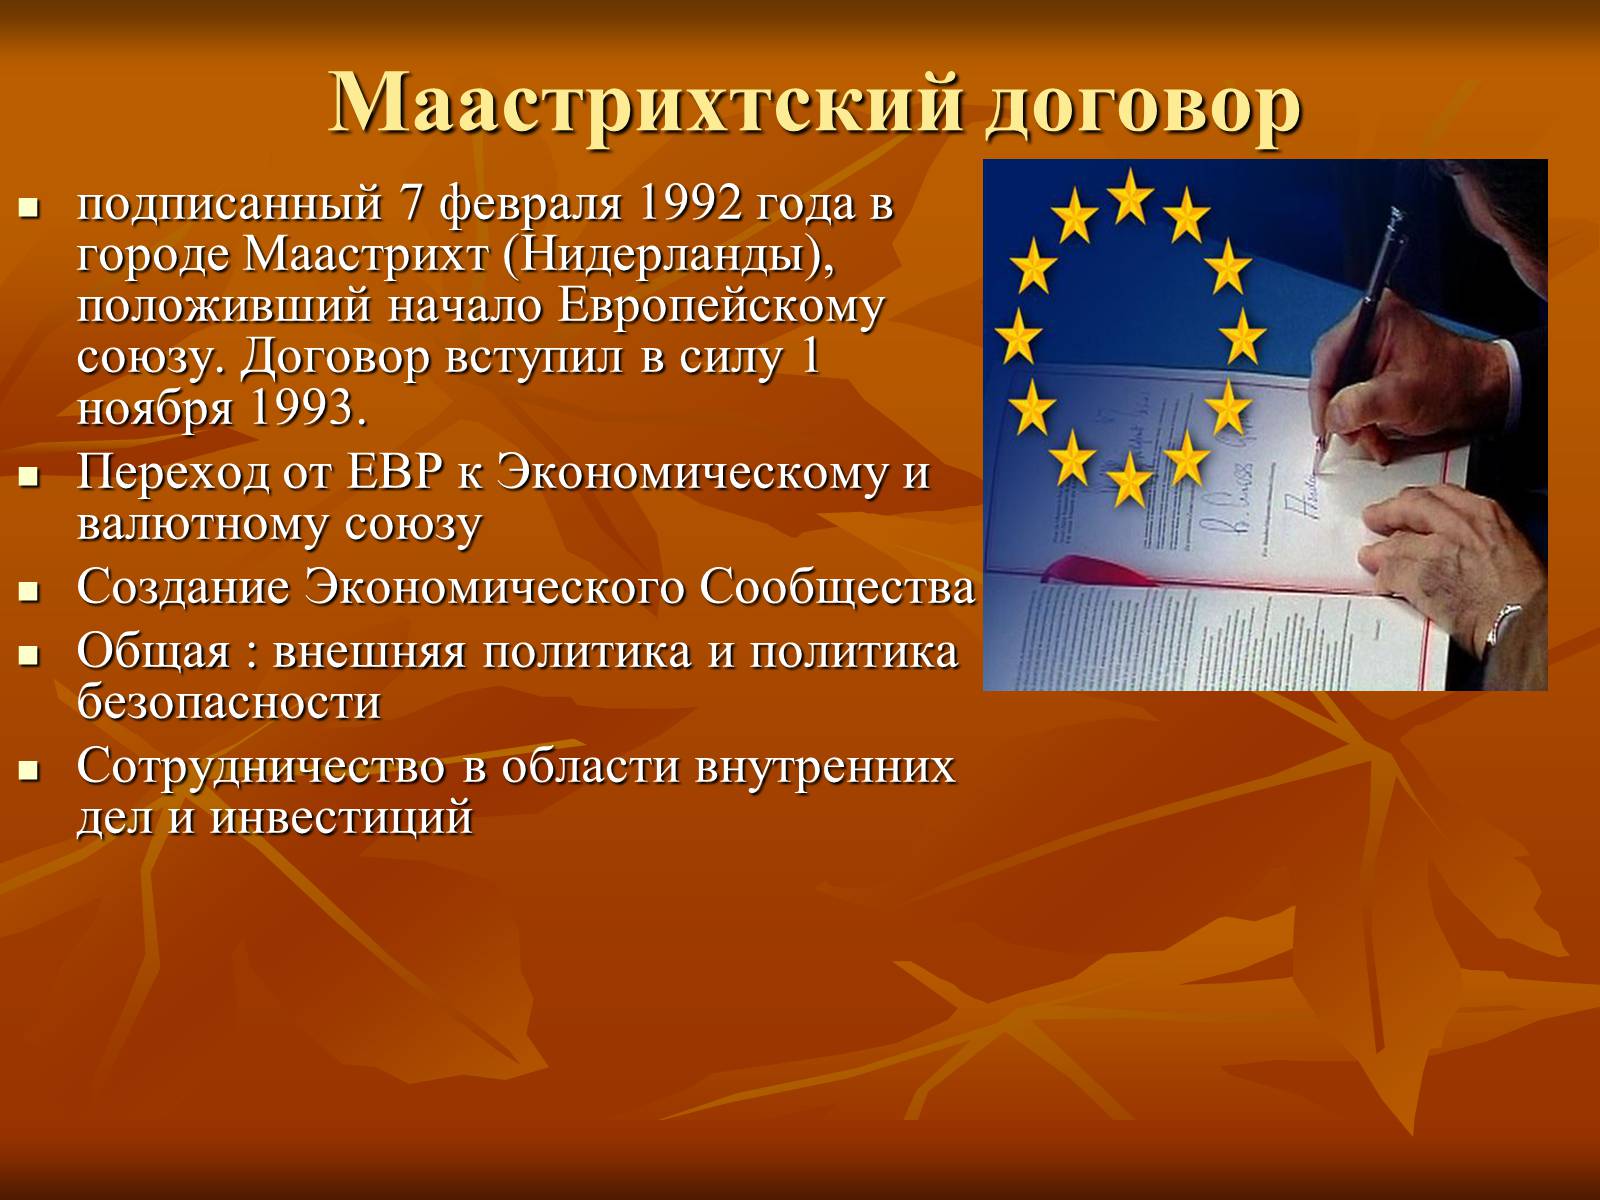 Союз 1992. Маастрихтский договор 1993. Маастрихтский договор о европейском Союзе. Европейский Союз 1992. Маастрихтский договор 1992 г.